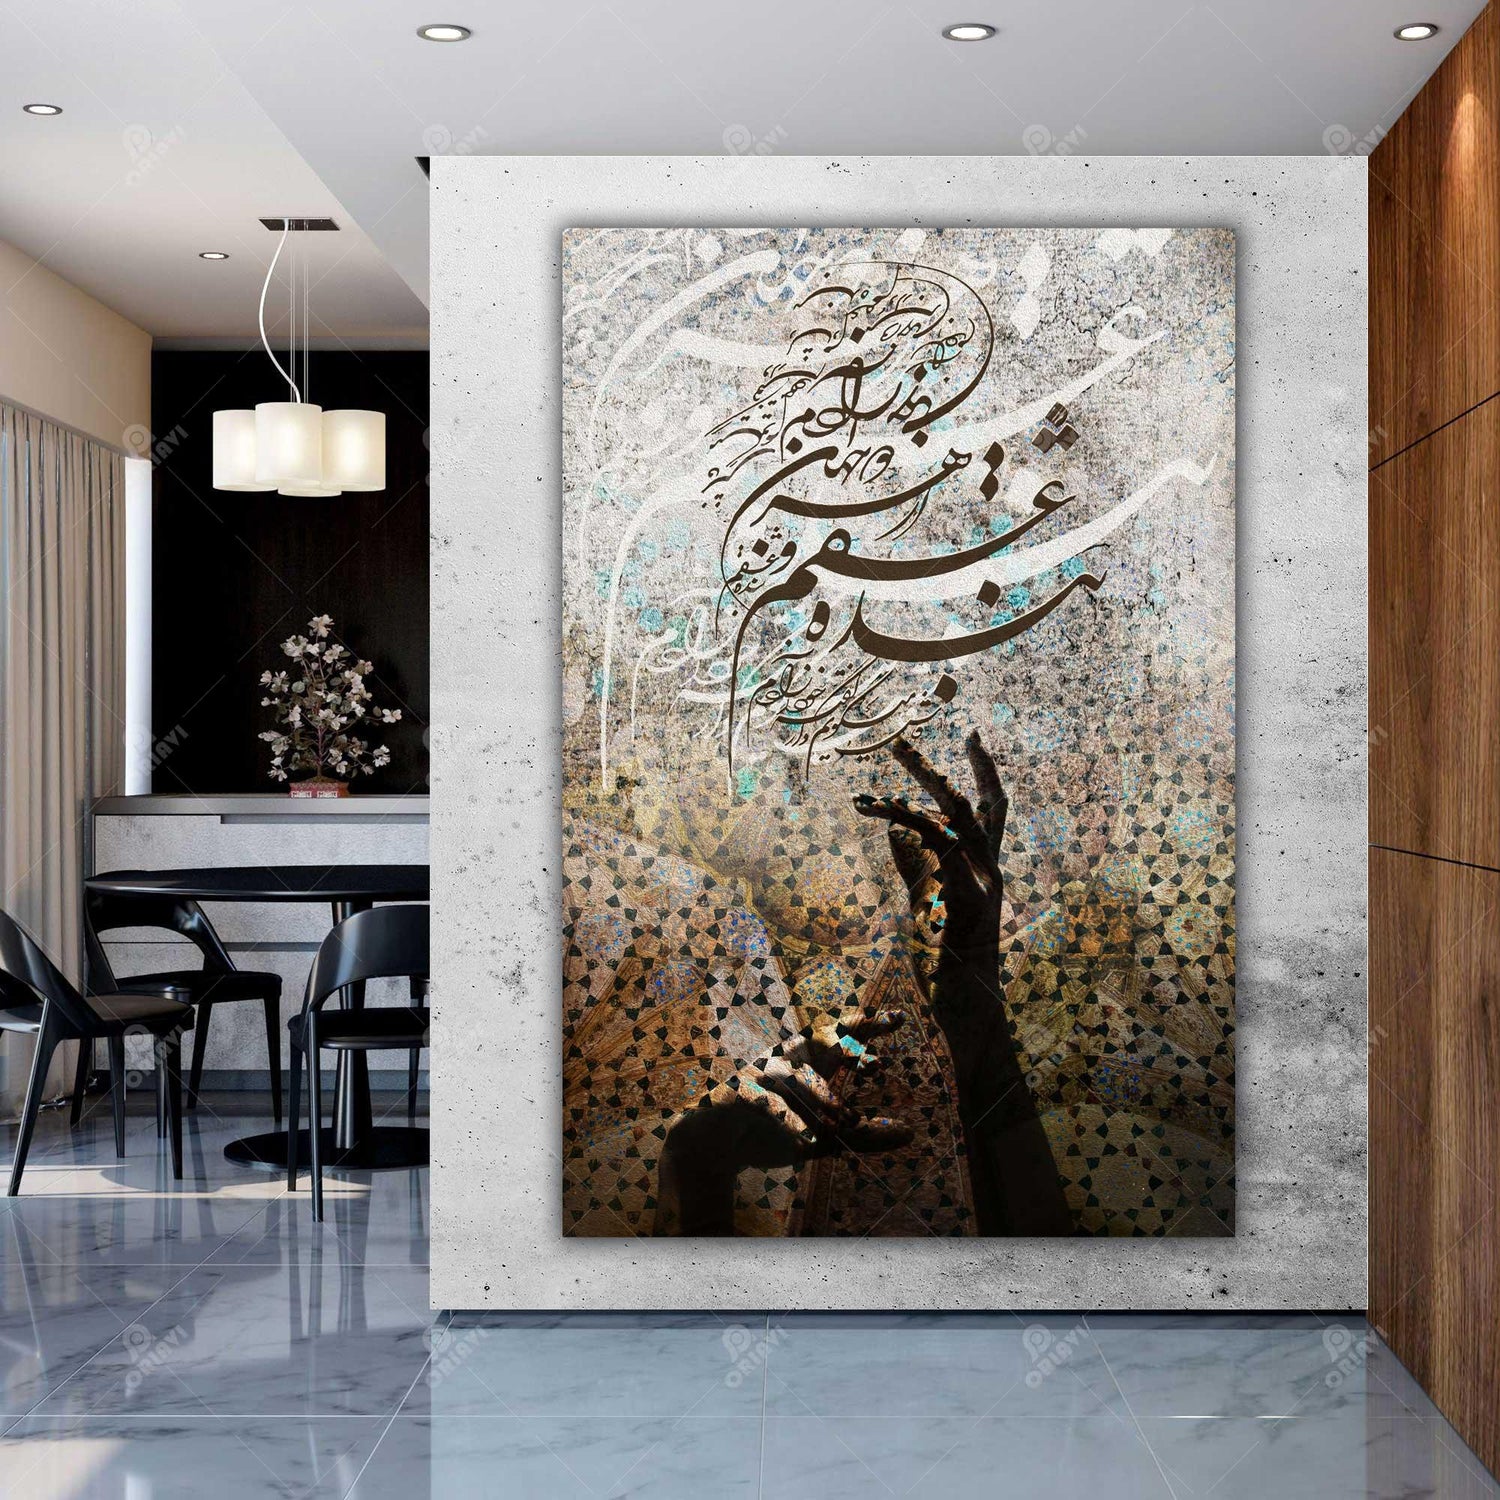 بـنده عشقـم و از هر دو جهان آزادم - Persian calligraphy wall art, High Quality and Ready to Hang. This Modern Persian Wall décor completes and elevates your home. Amazing and eye-catching for your home or office.